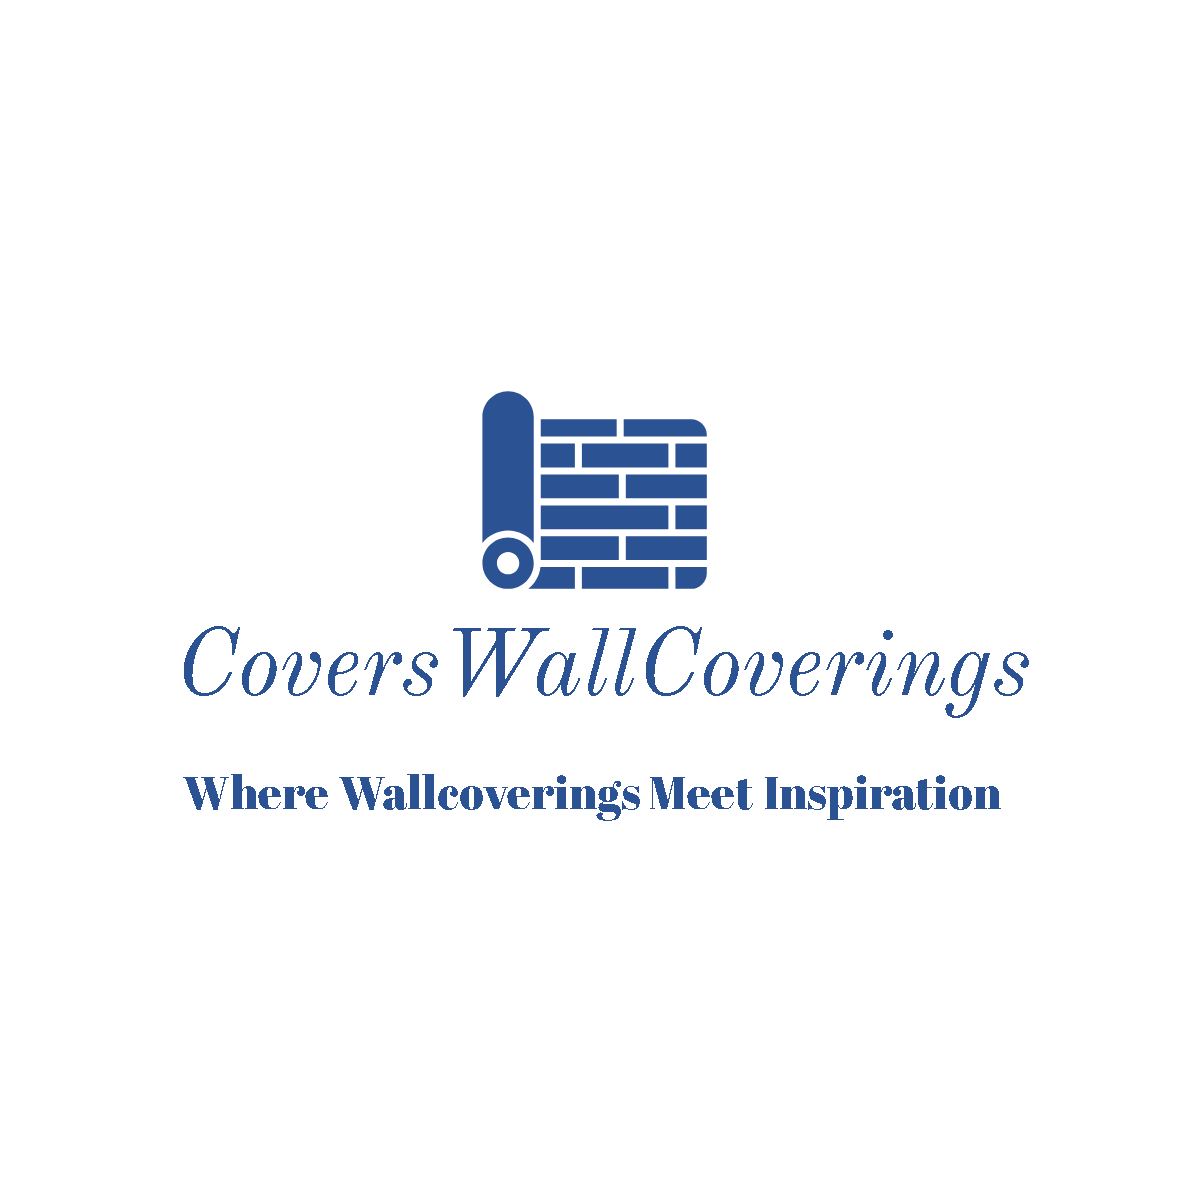 CoversWallCoverings logo